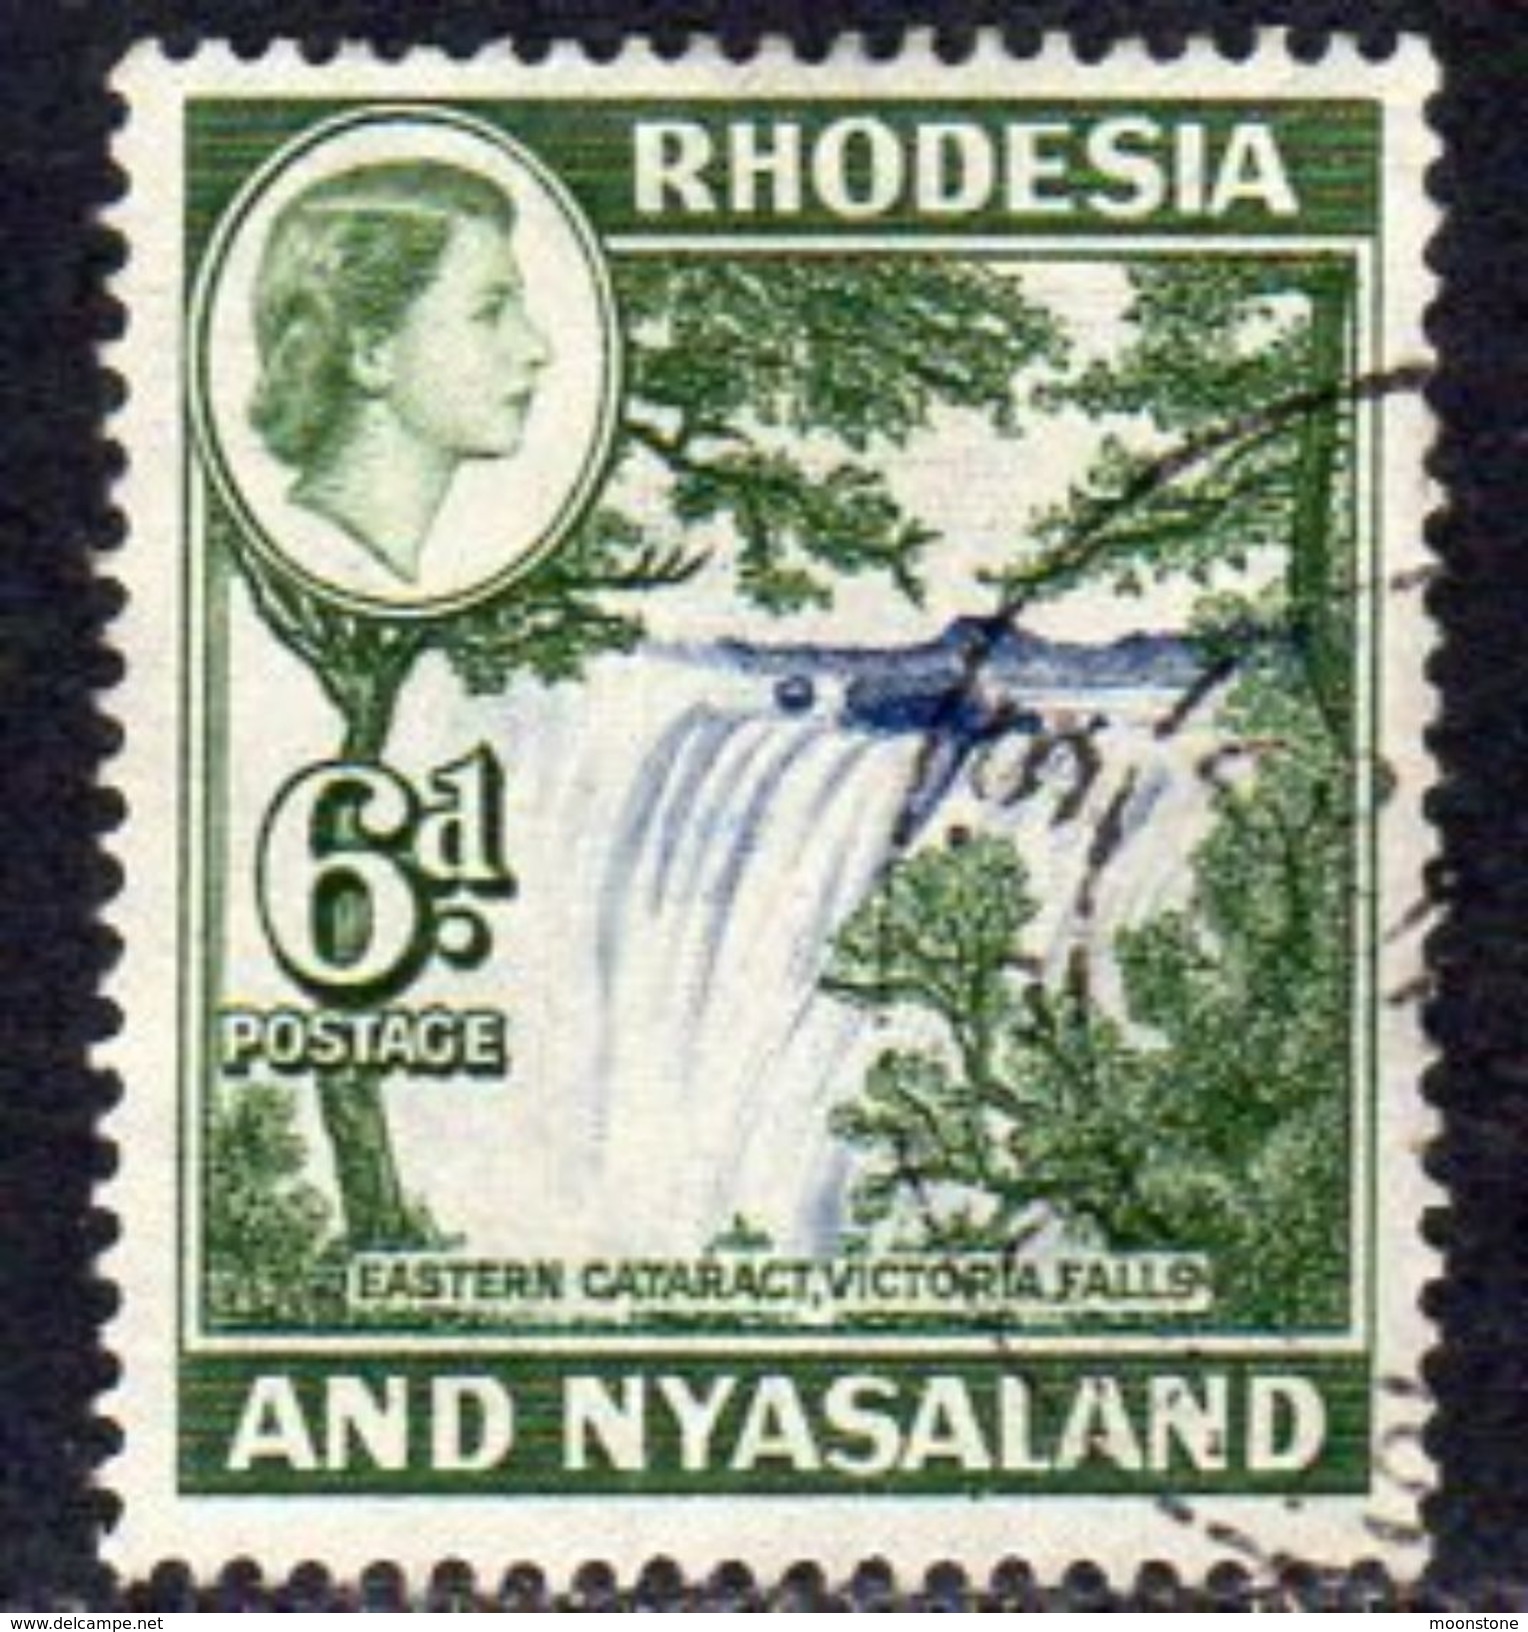 Rhodesia & Nyasaland 1959 6d Victoria Falls Definitive, Used, SG 24 (BA) - Rhodesia & Nyasaland (1954-1963)